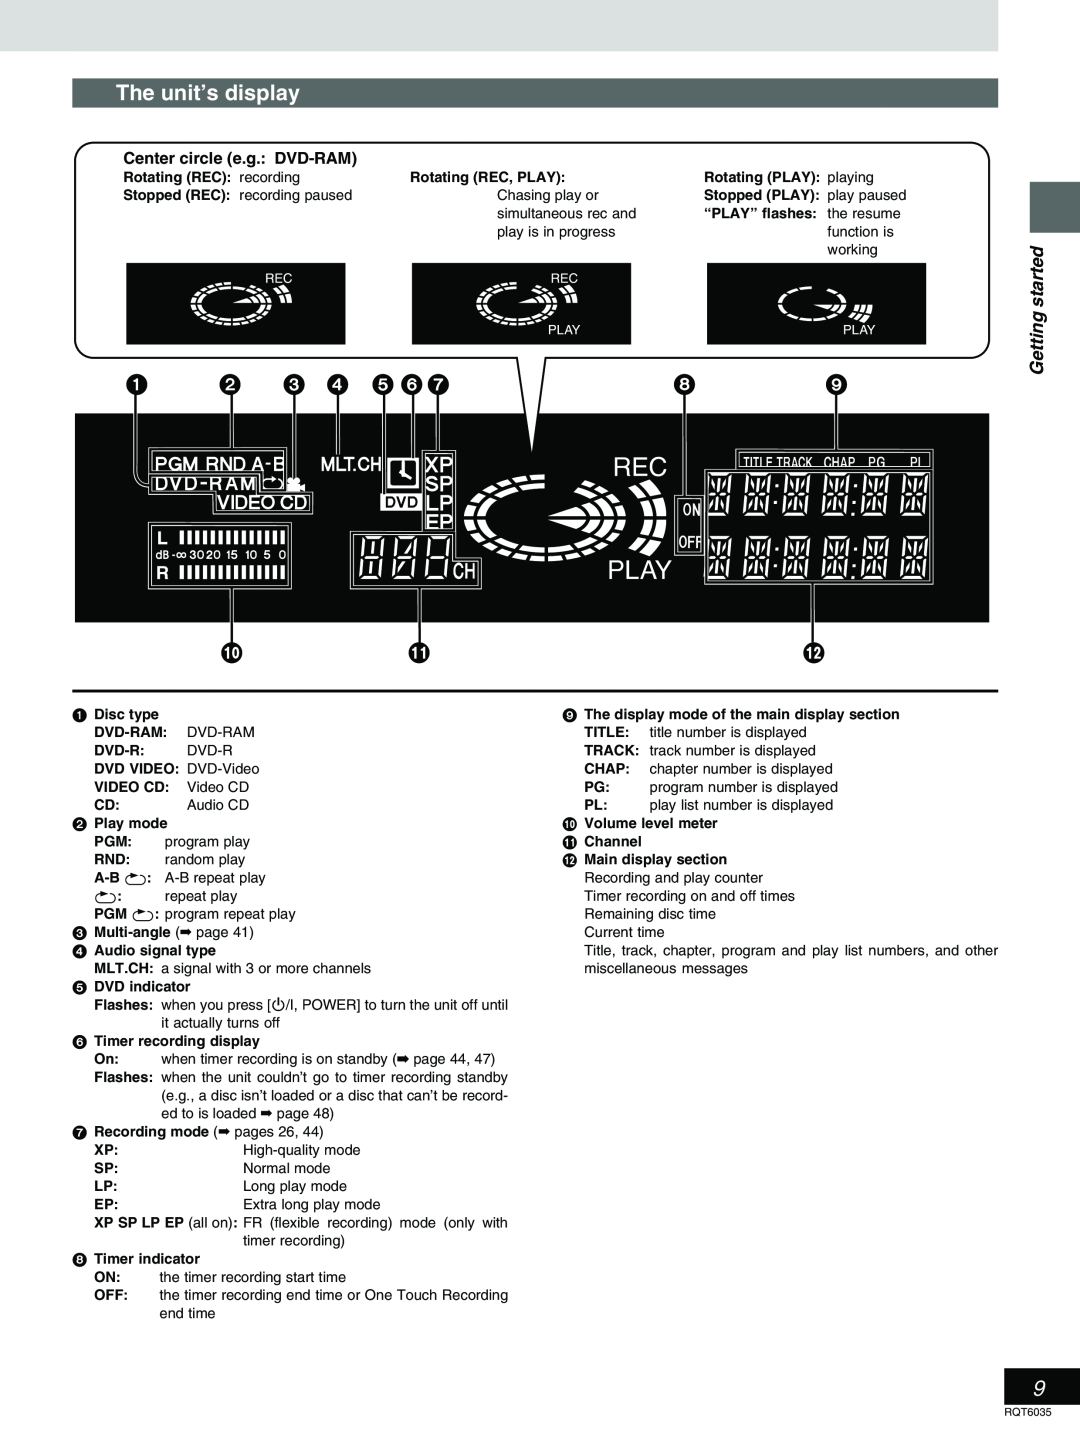 Panasonic DMR-E20 warranty The unit’s display, Getting started, Center circle e.g. DVD-RAM 